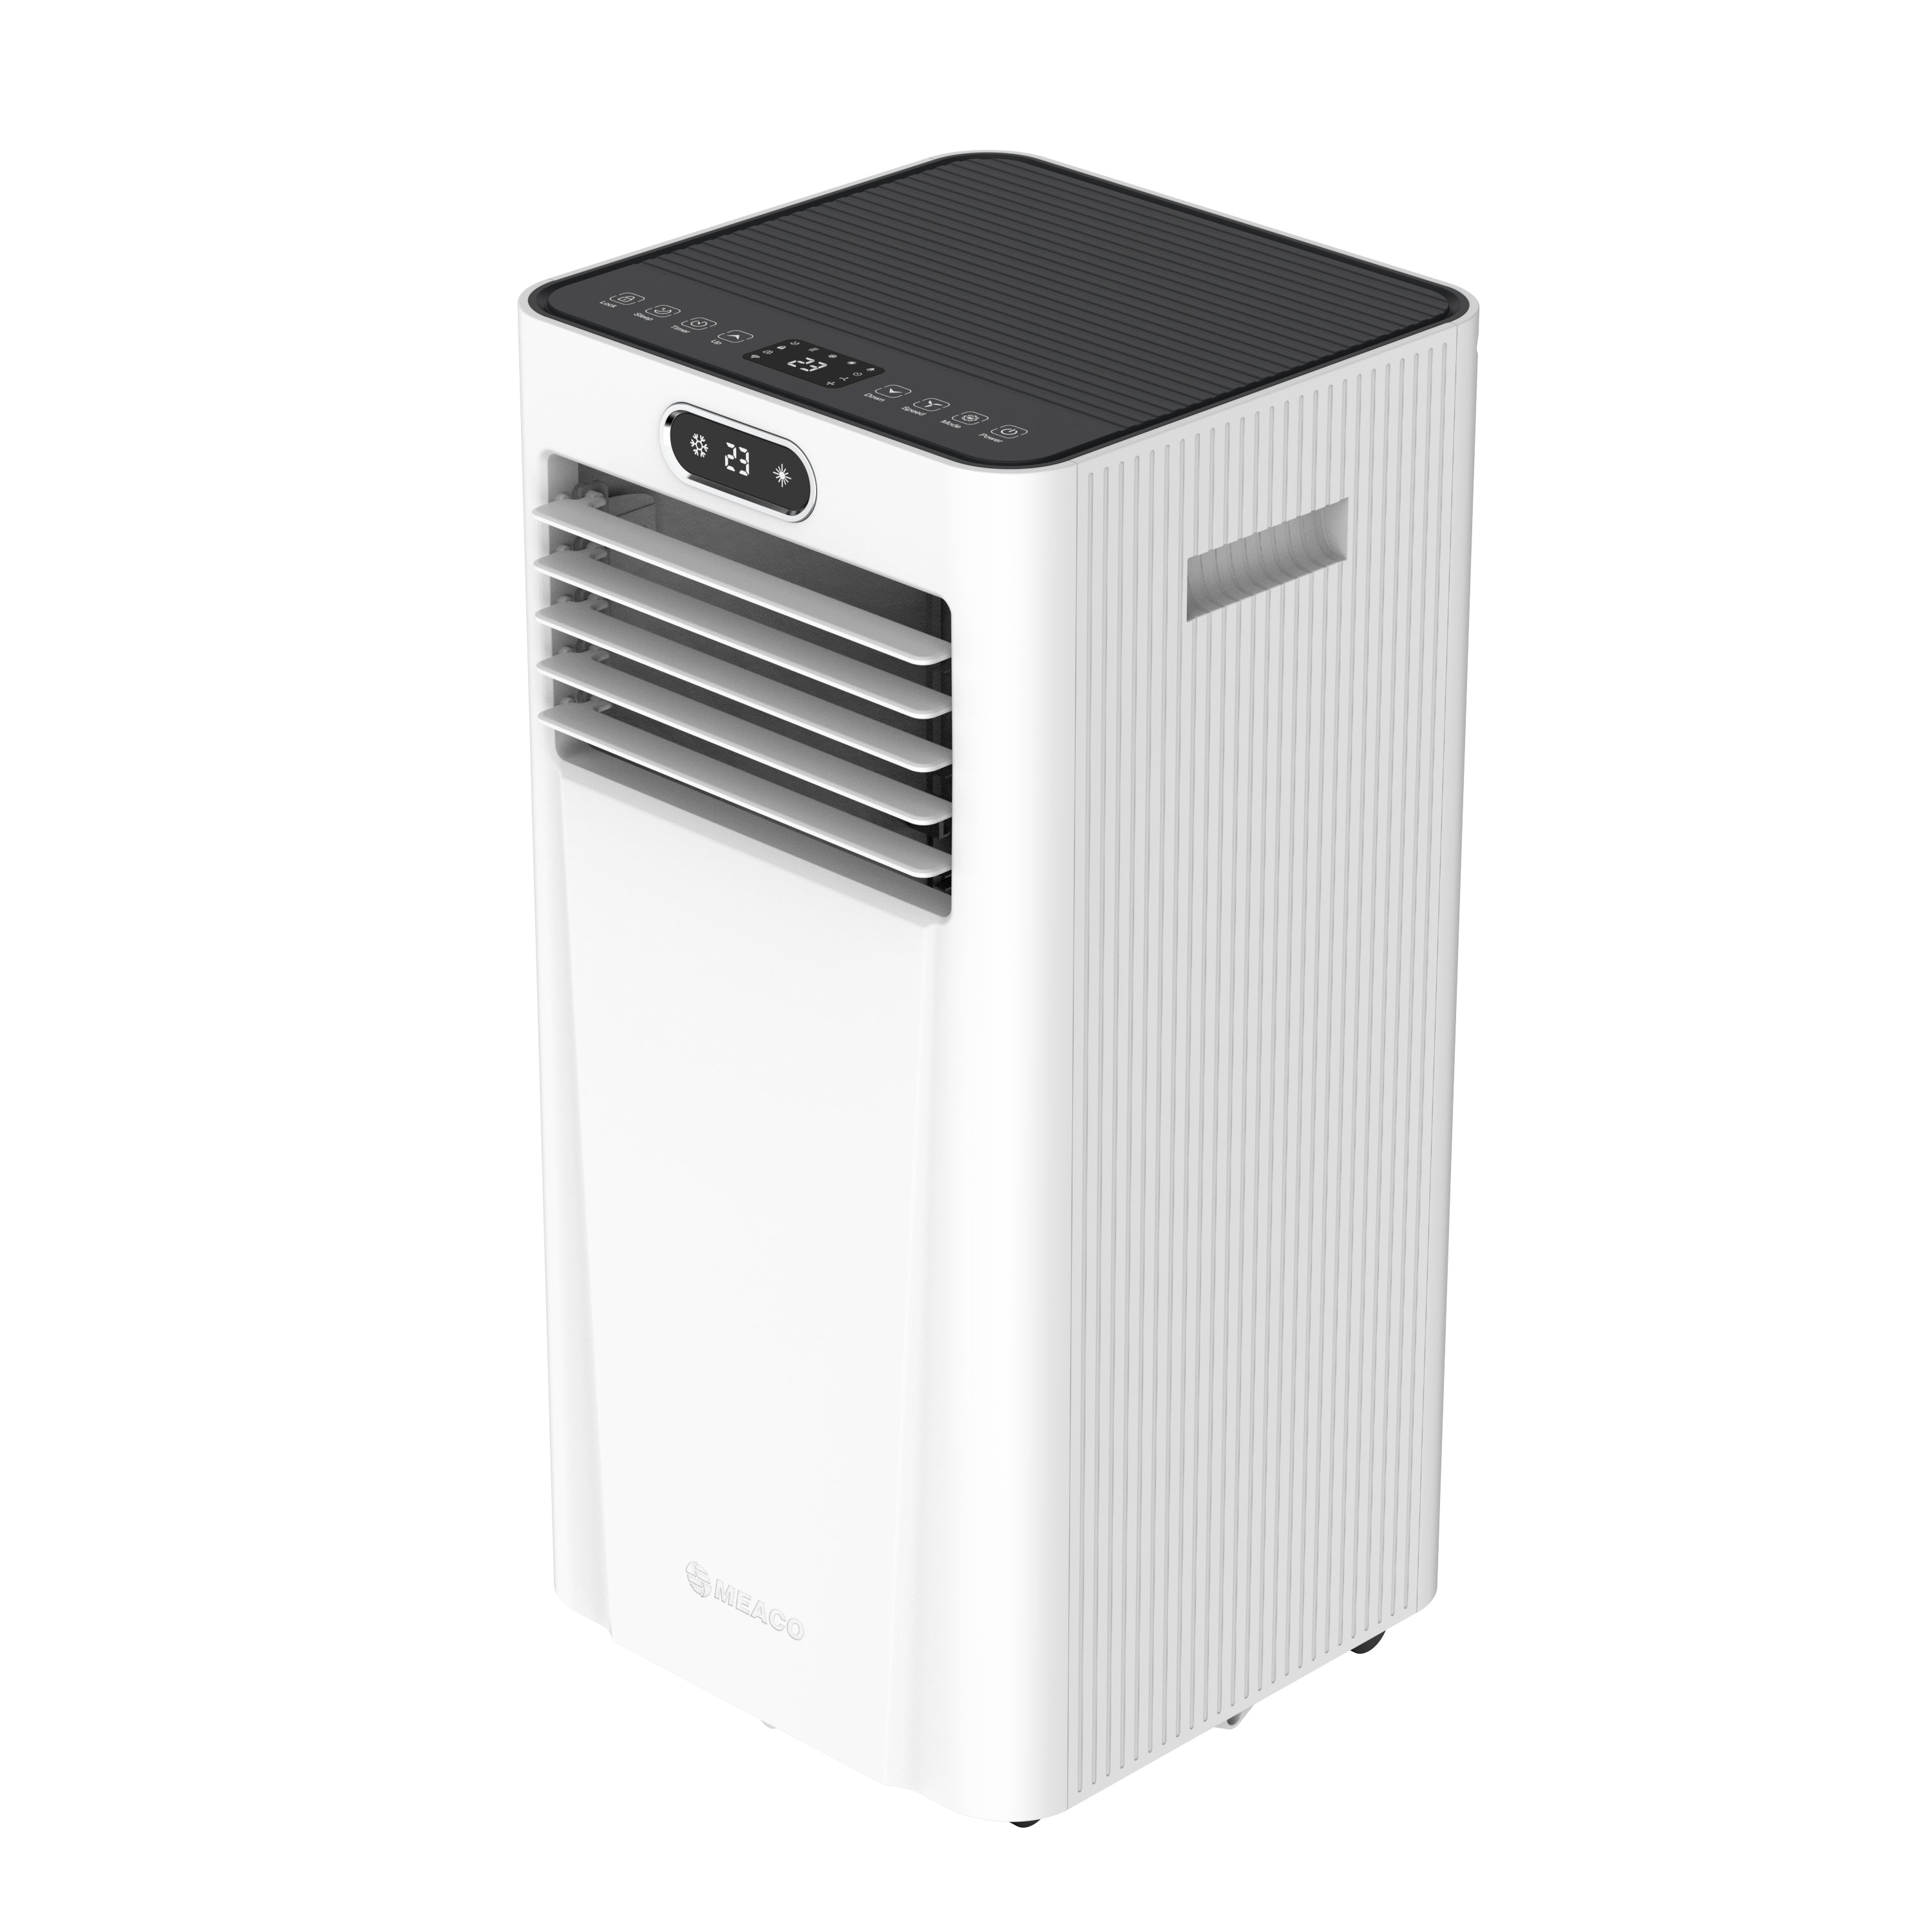 MeacoCool MC Series Pro 7000 BTU Portable Air Conditioner